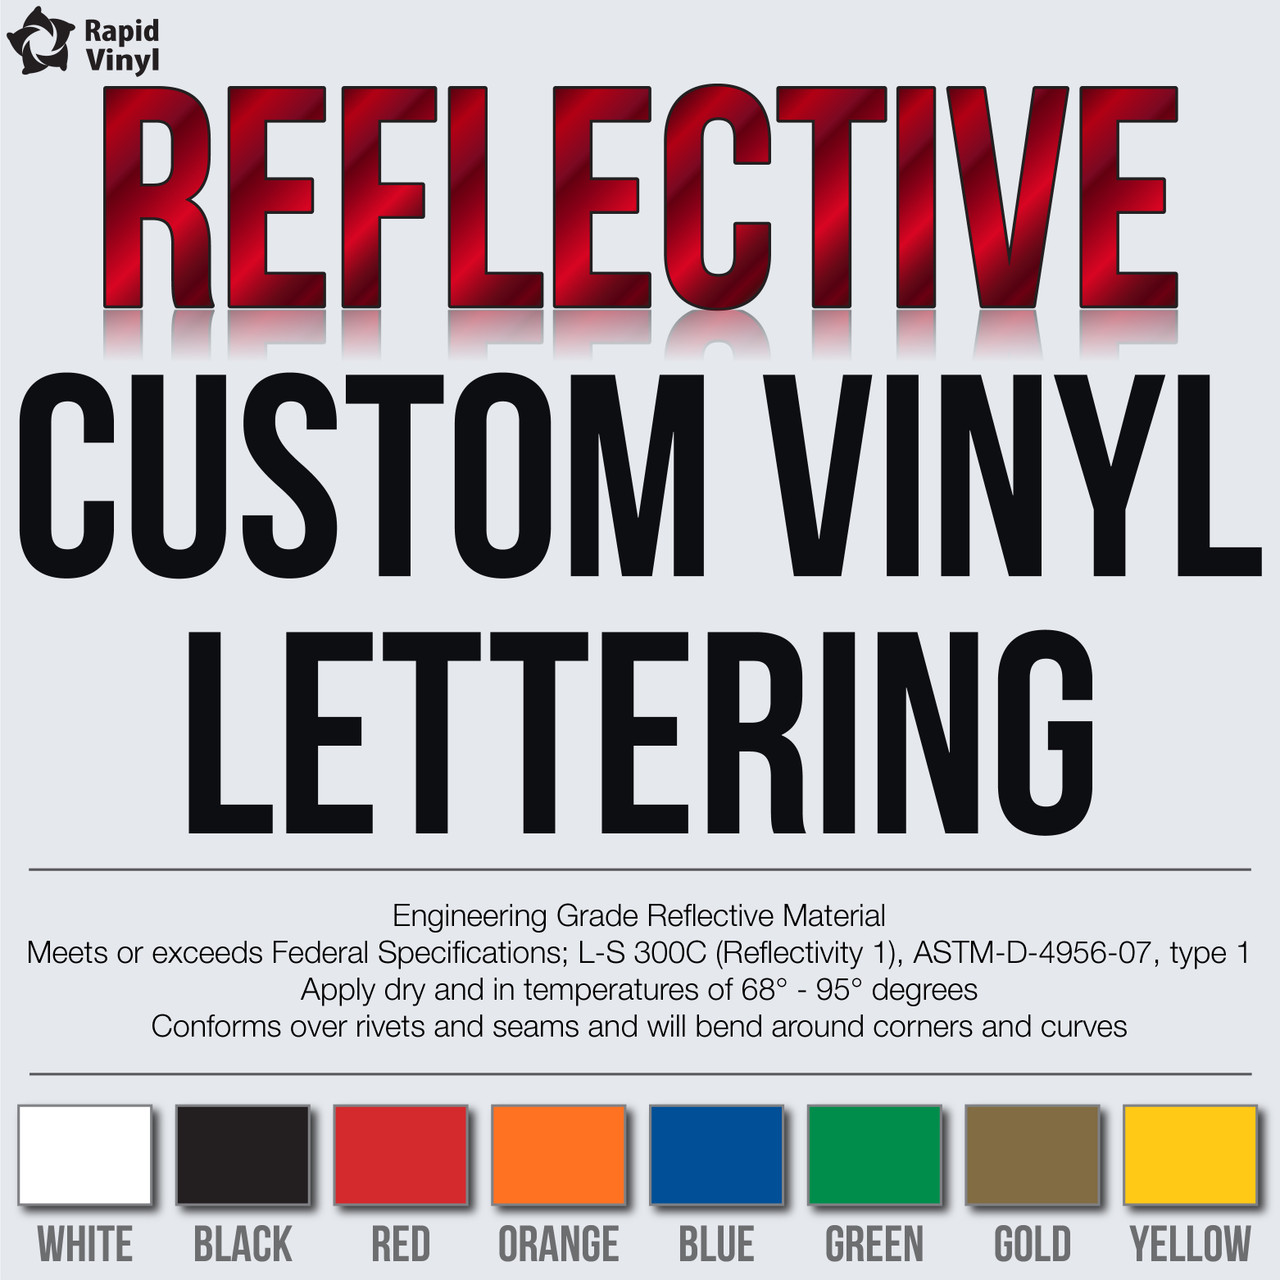 HeadLine Red Vinyl Stick-On Letters